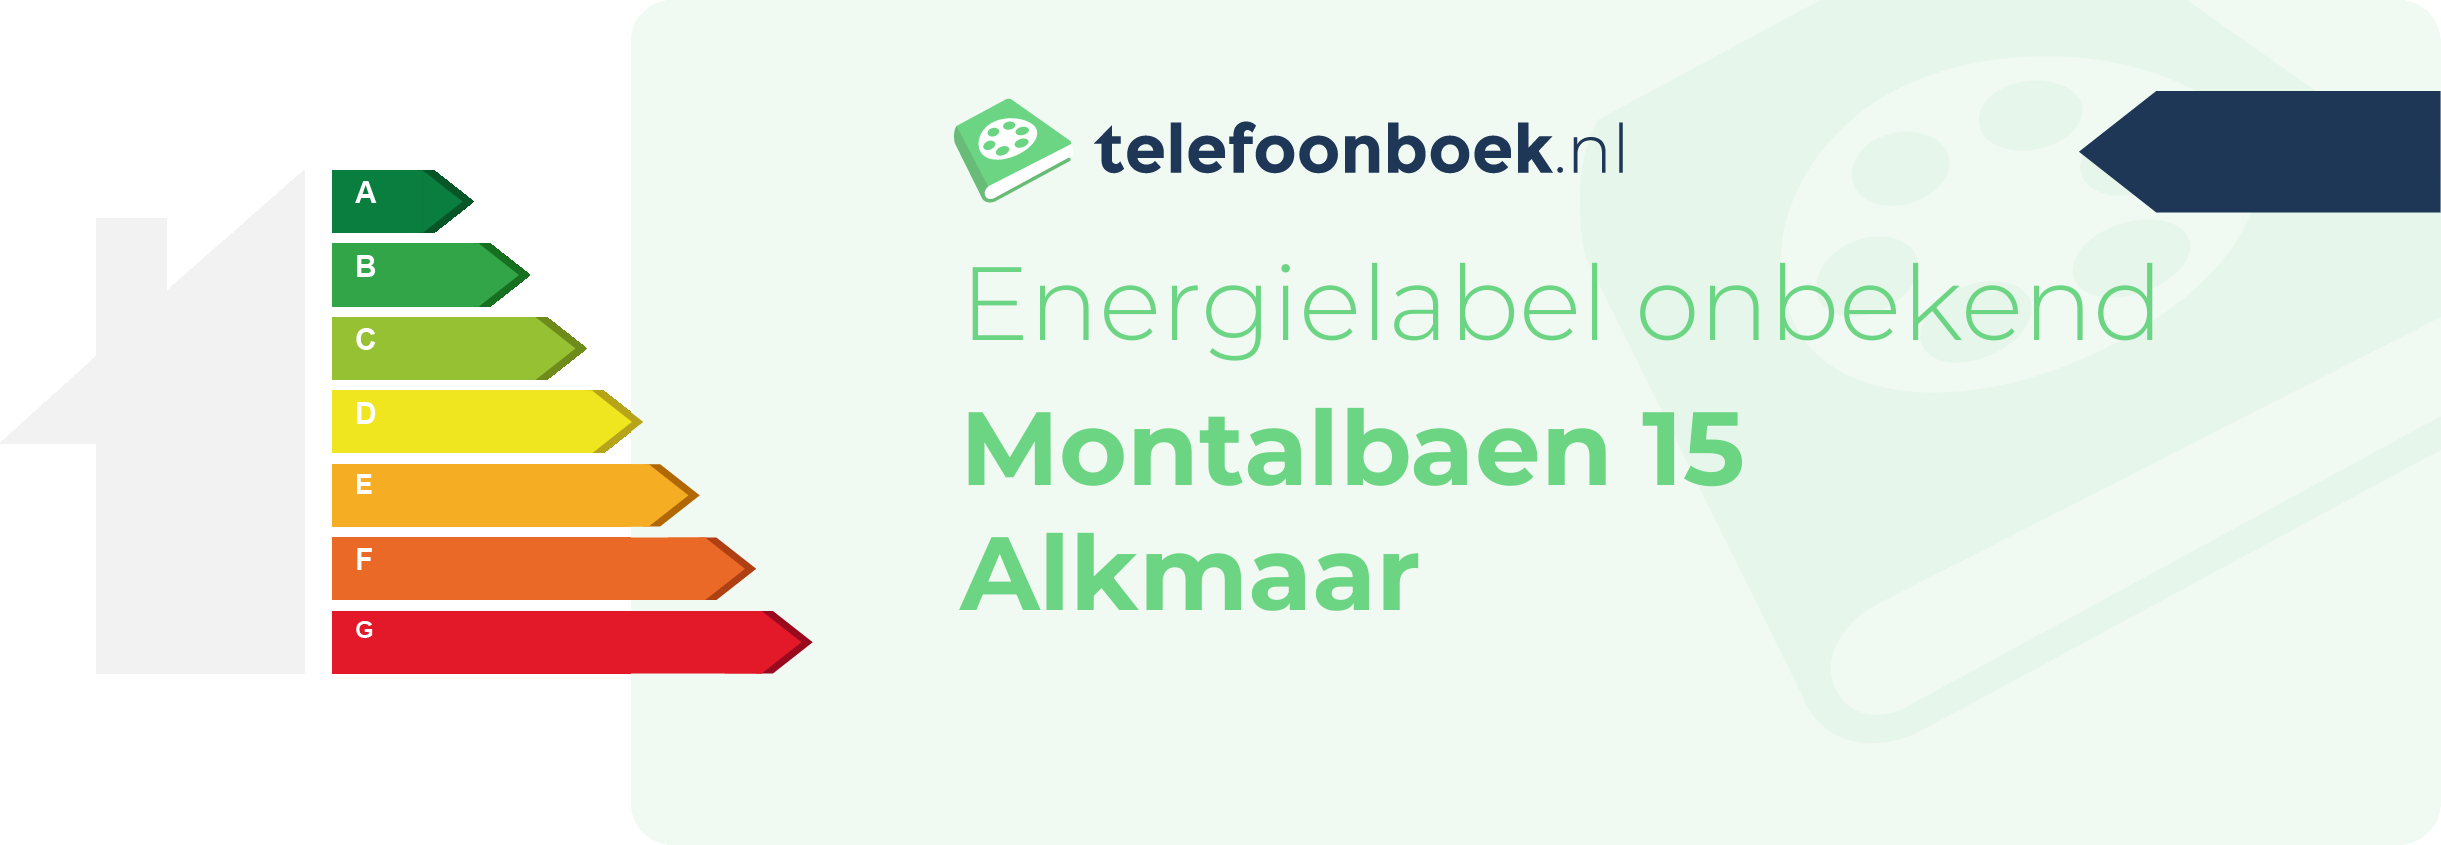 Energielabel Montalbaen 15 Alkmaar